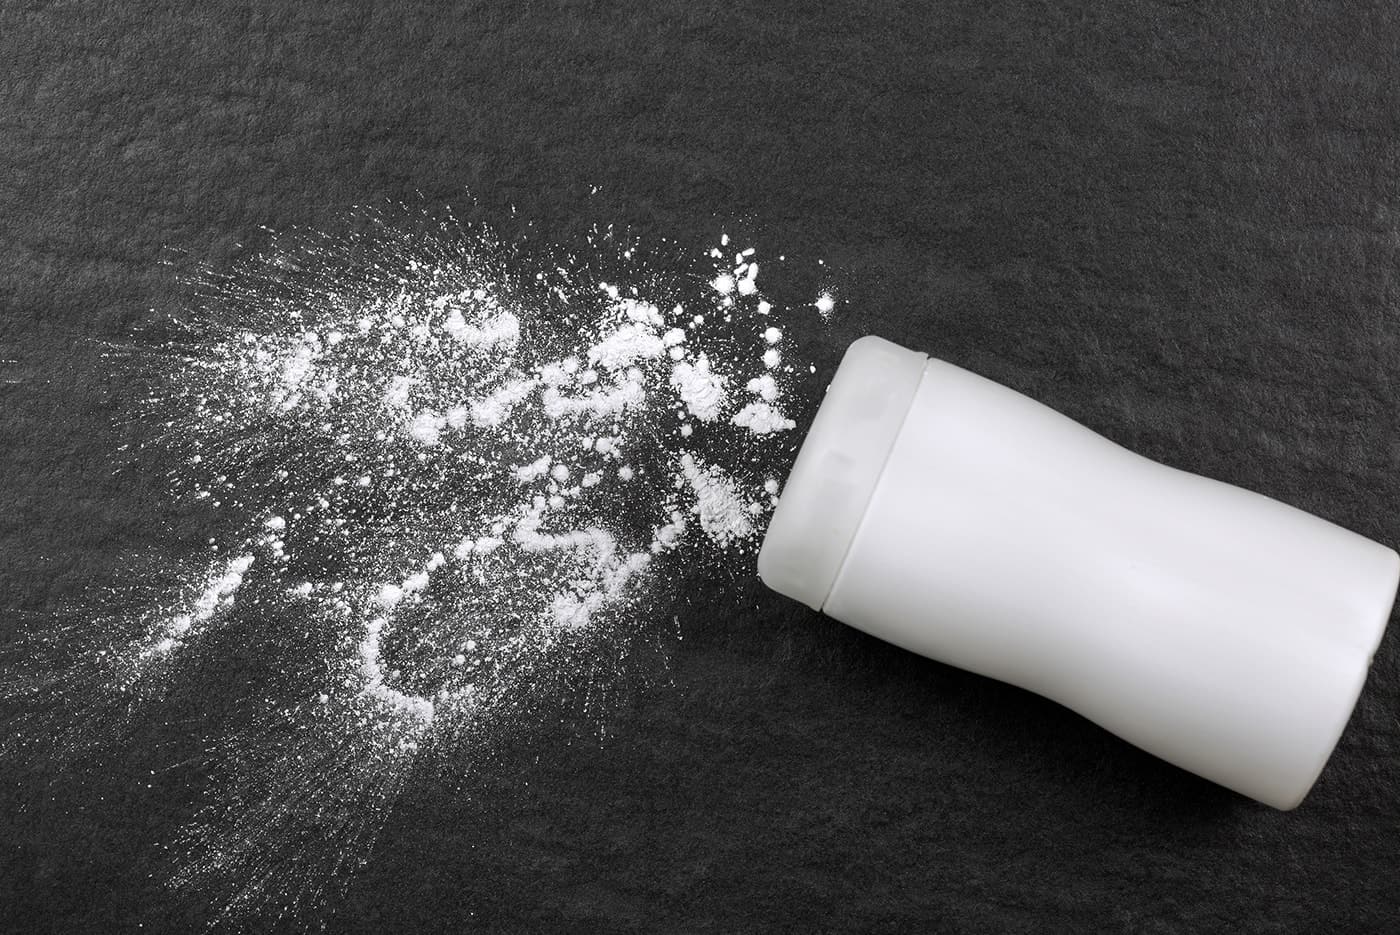 Talcum Powder as a Cause of Mesothelioma?